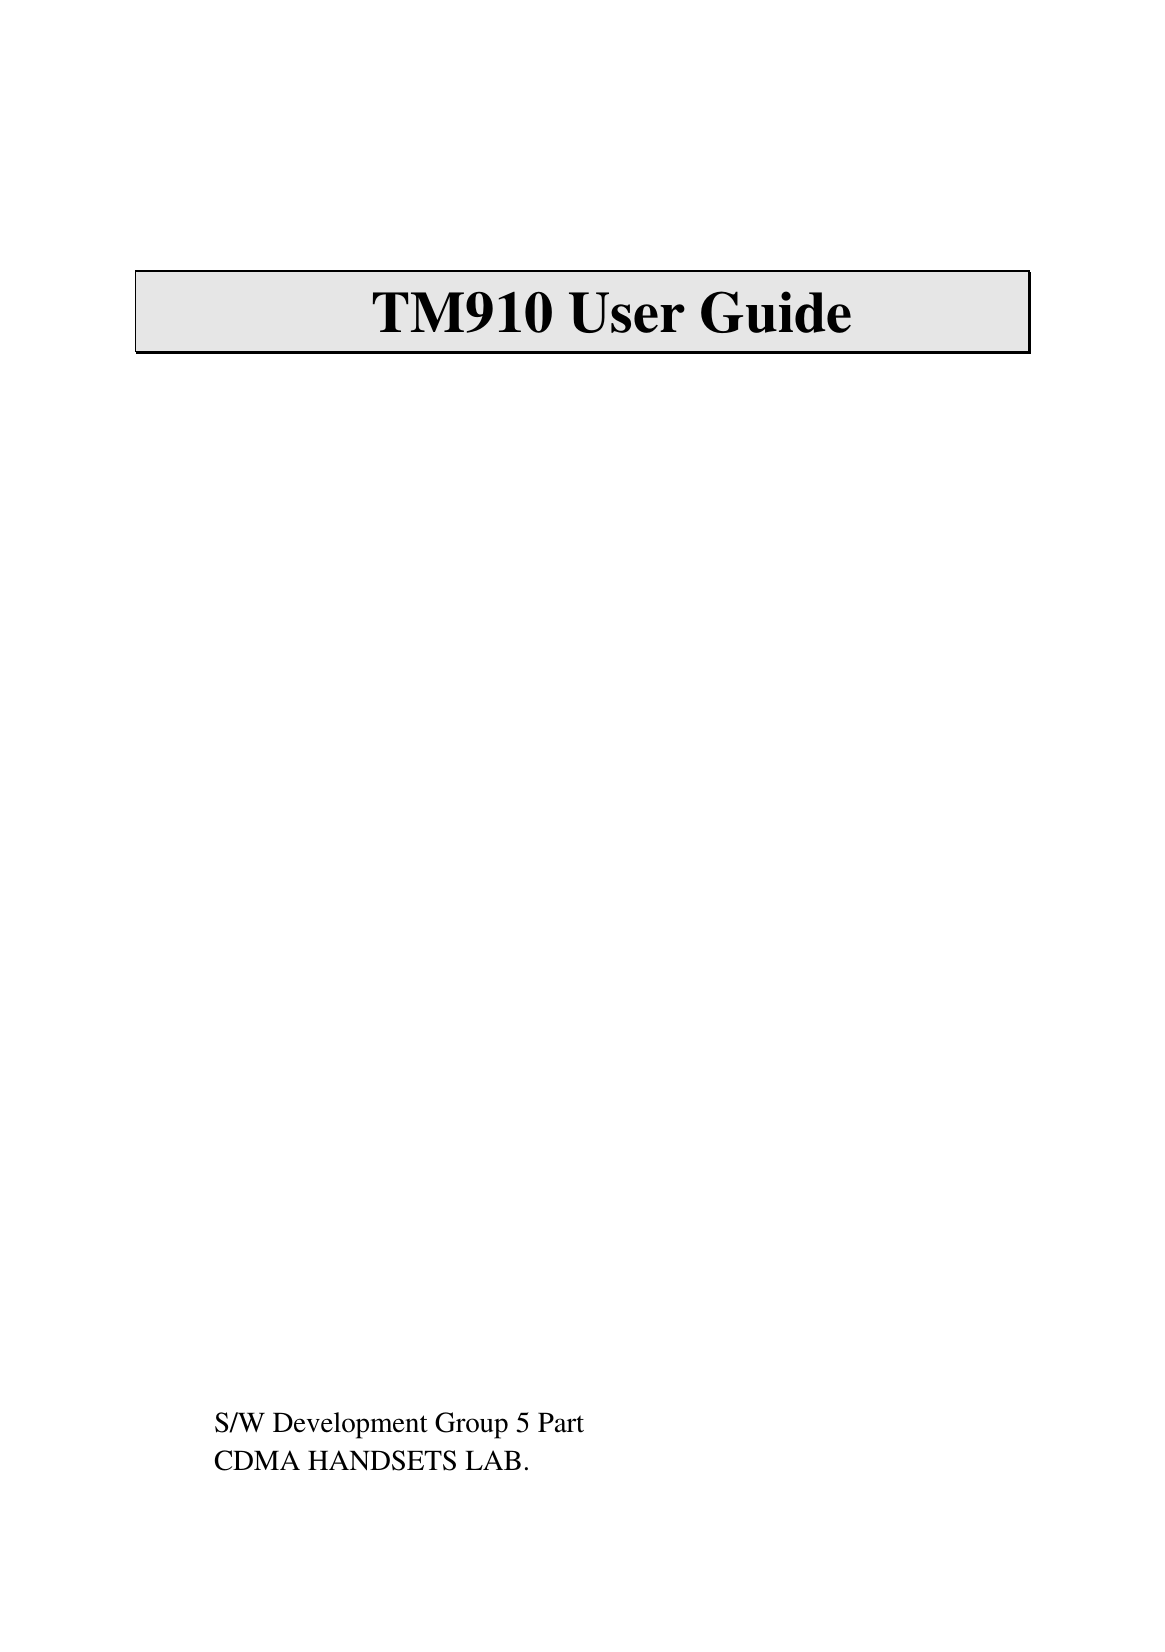    TM910 User Guide               S/W Development Group 5 Part CDMA HANDSETS LAB. 